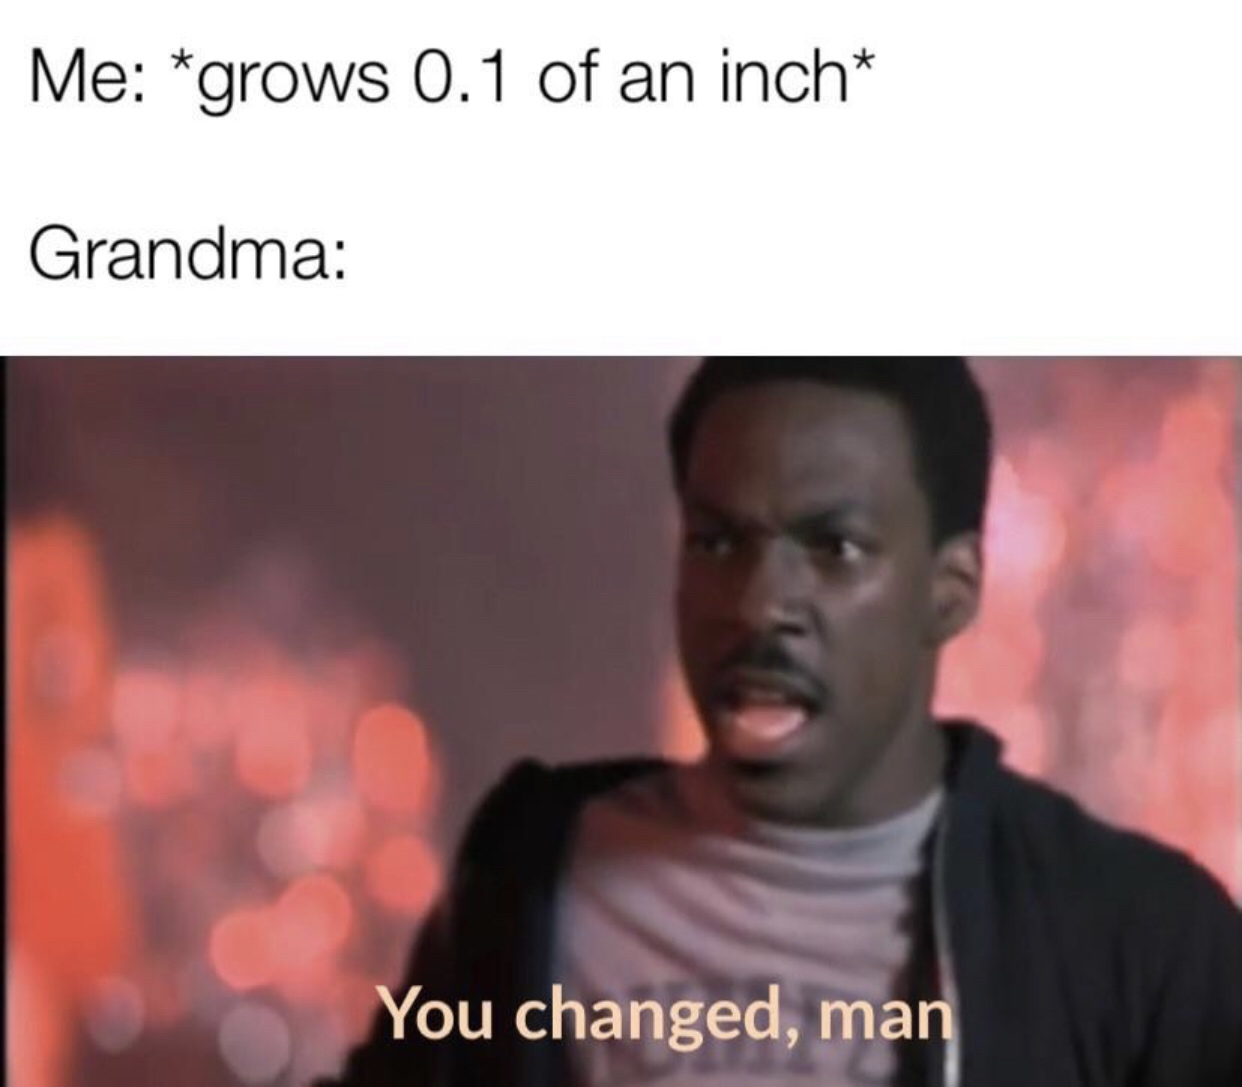 photo caption - Me grows 0.1 of an inch Grandma You changed, man